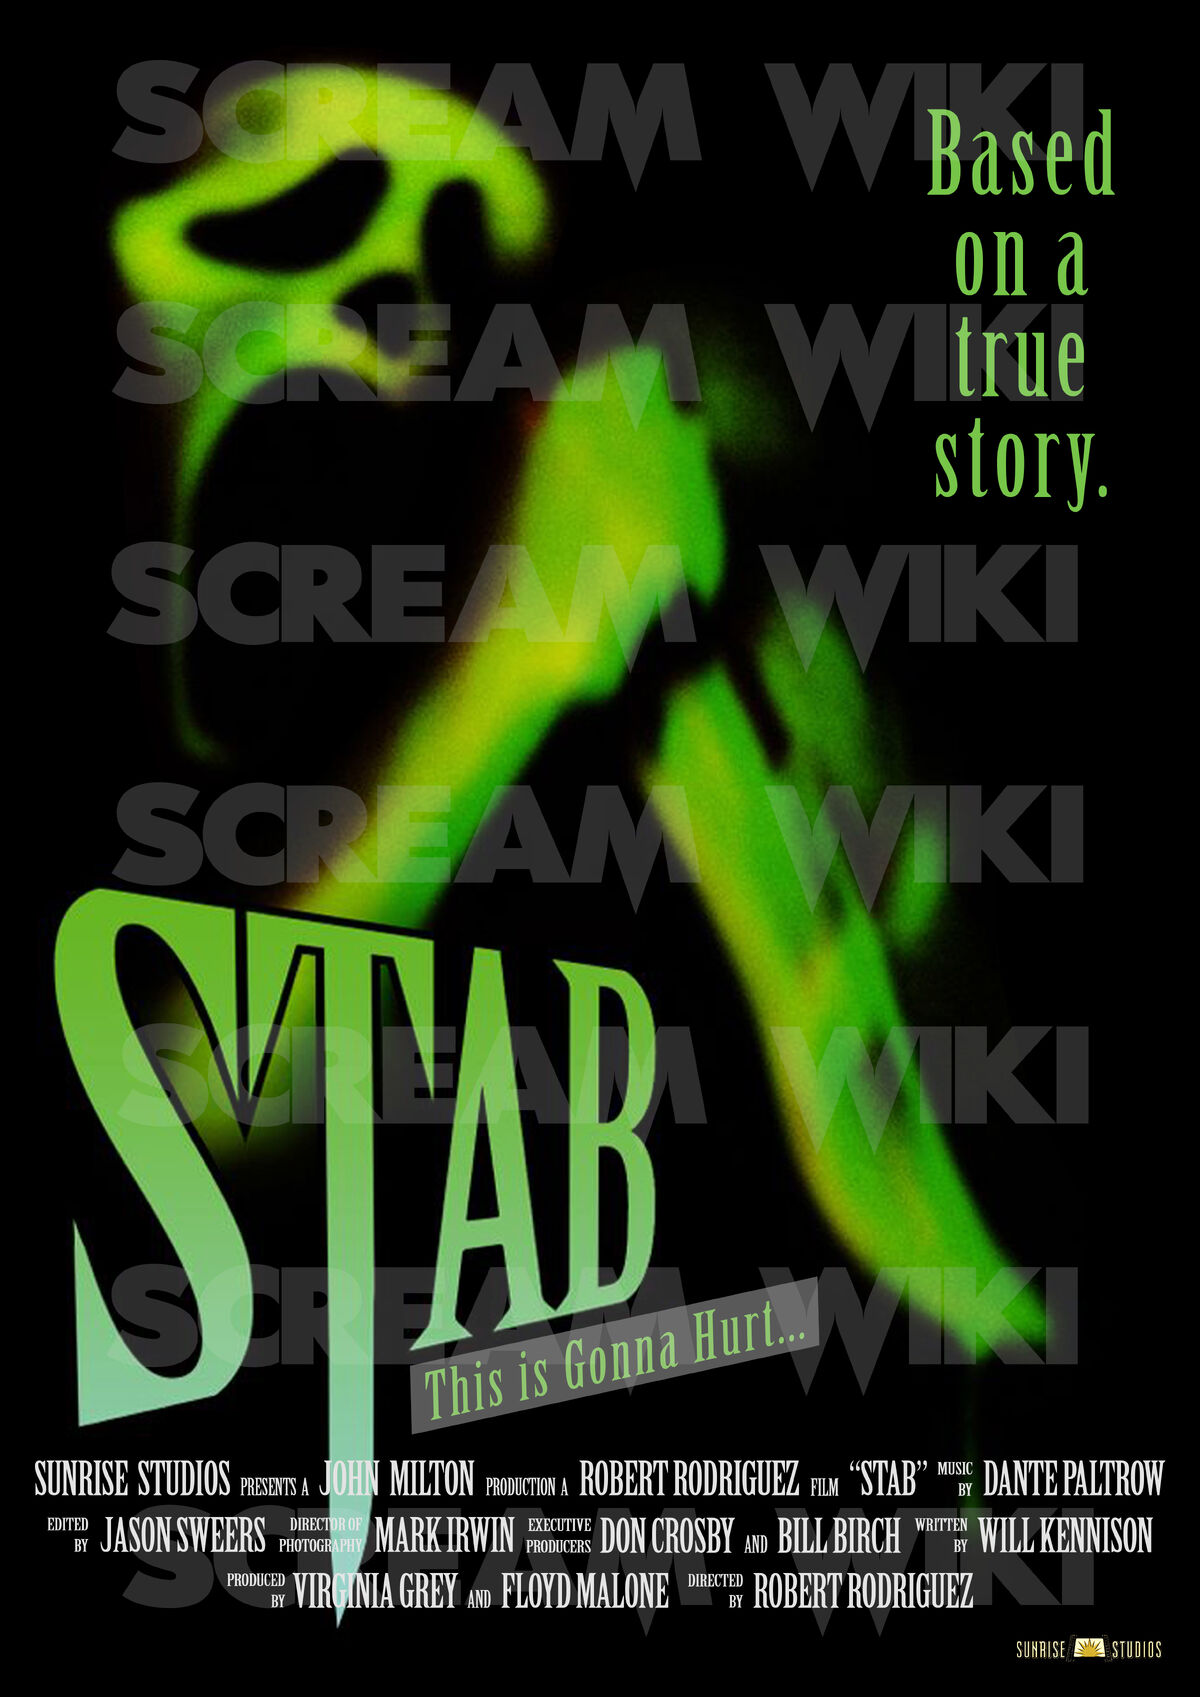 Stab (film series), Scream Wiki